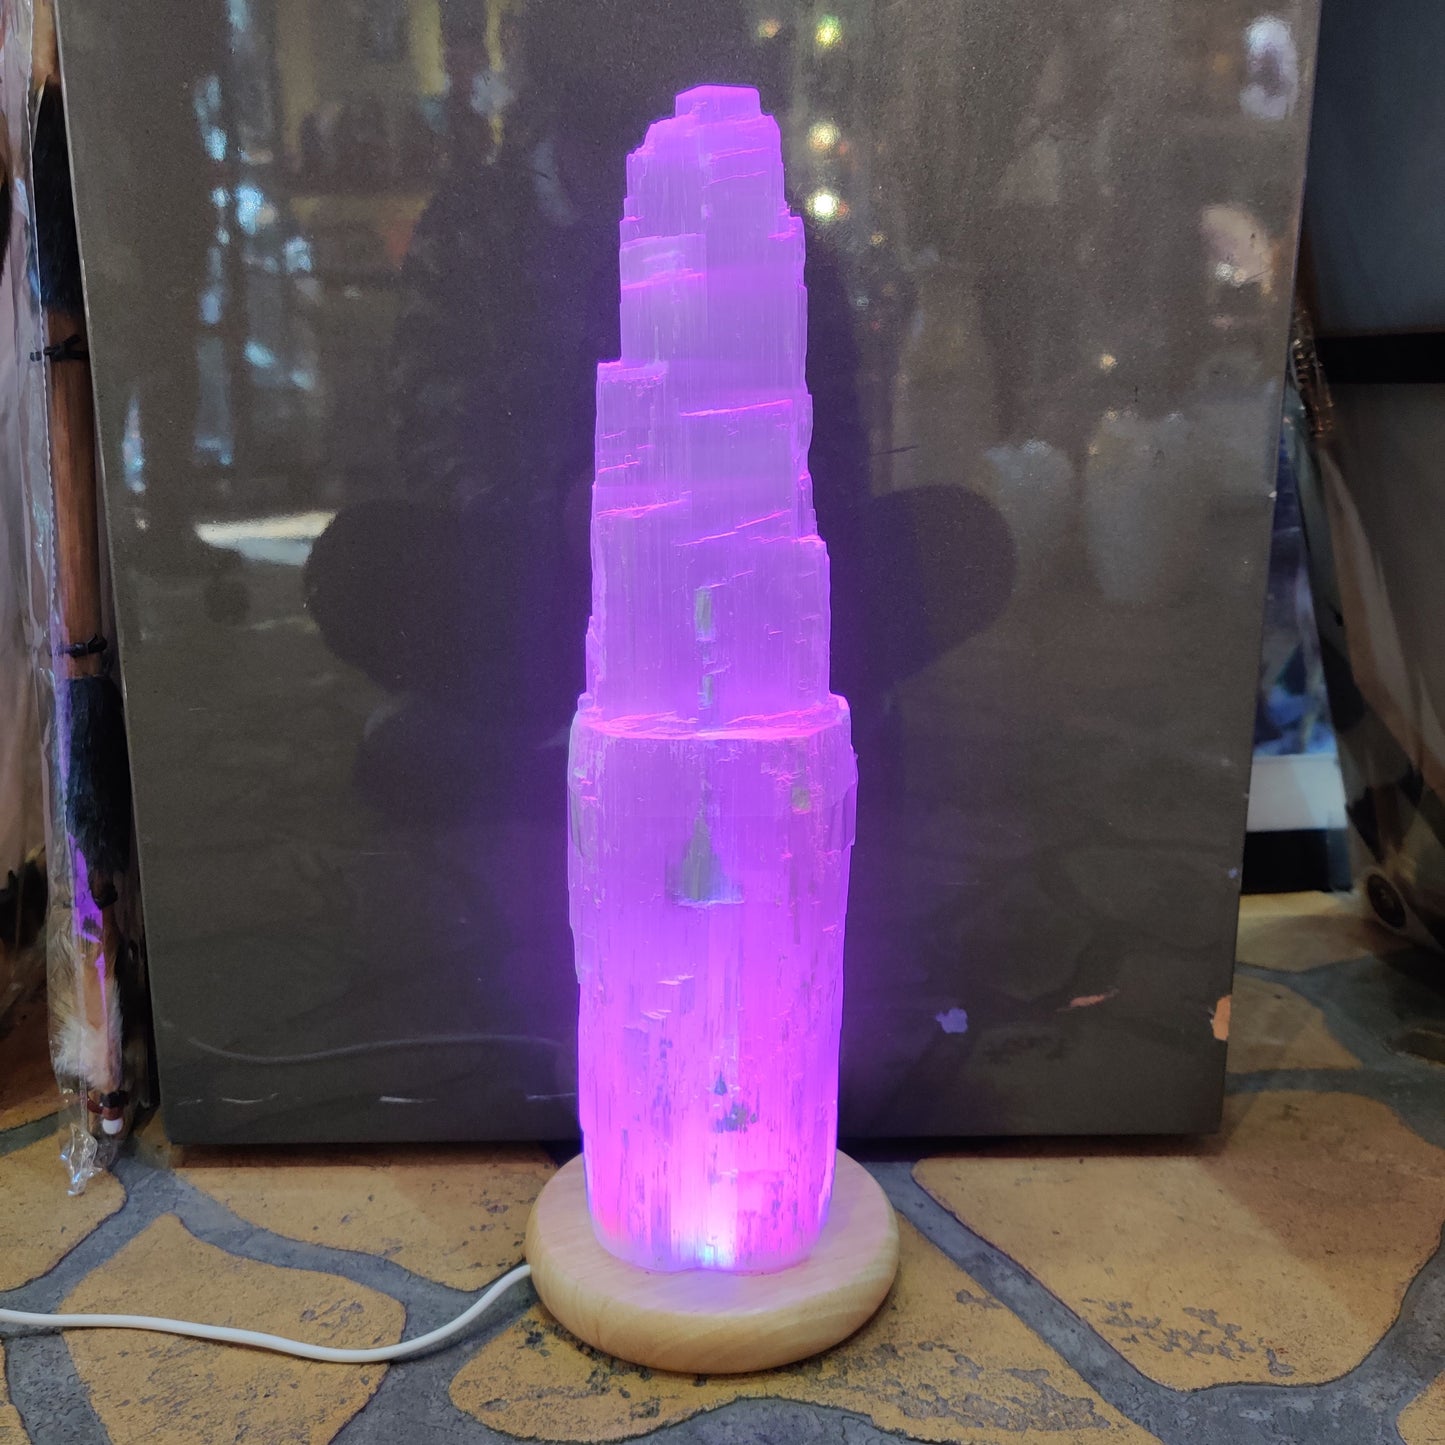 Extra Large 35cm Selenite LED Lamp with Mood Change Lighting - Rivendell Shop